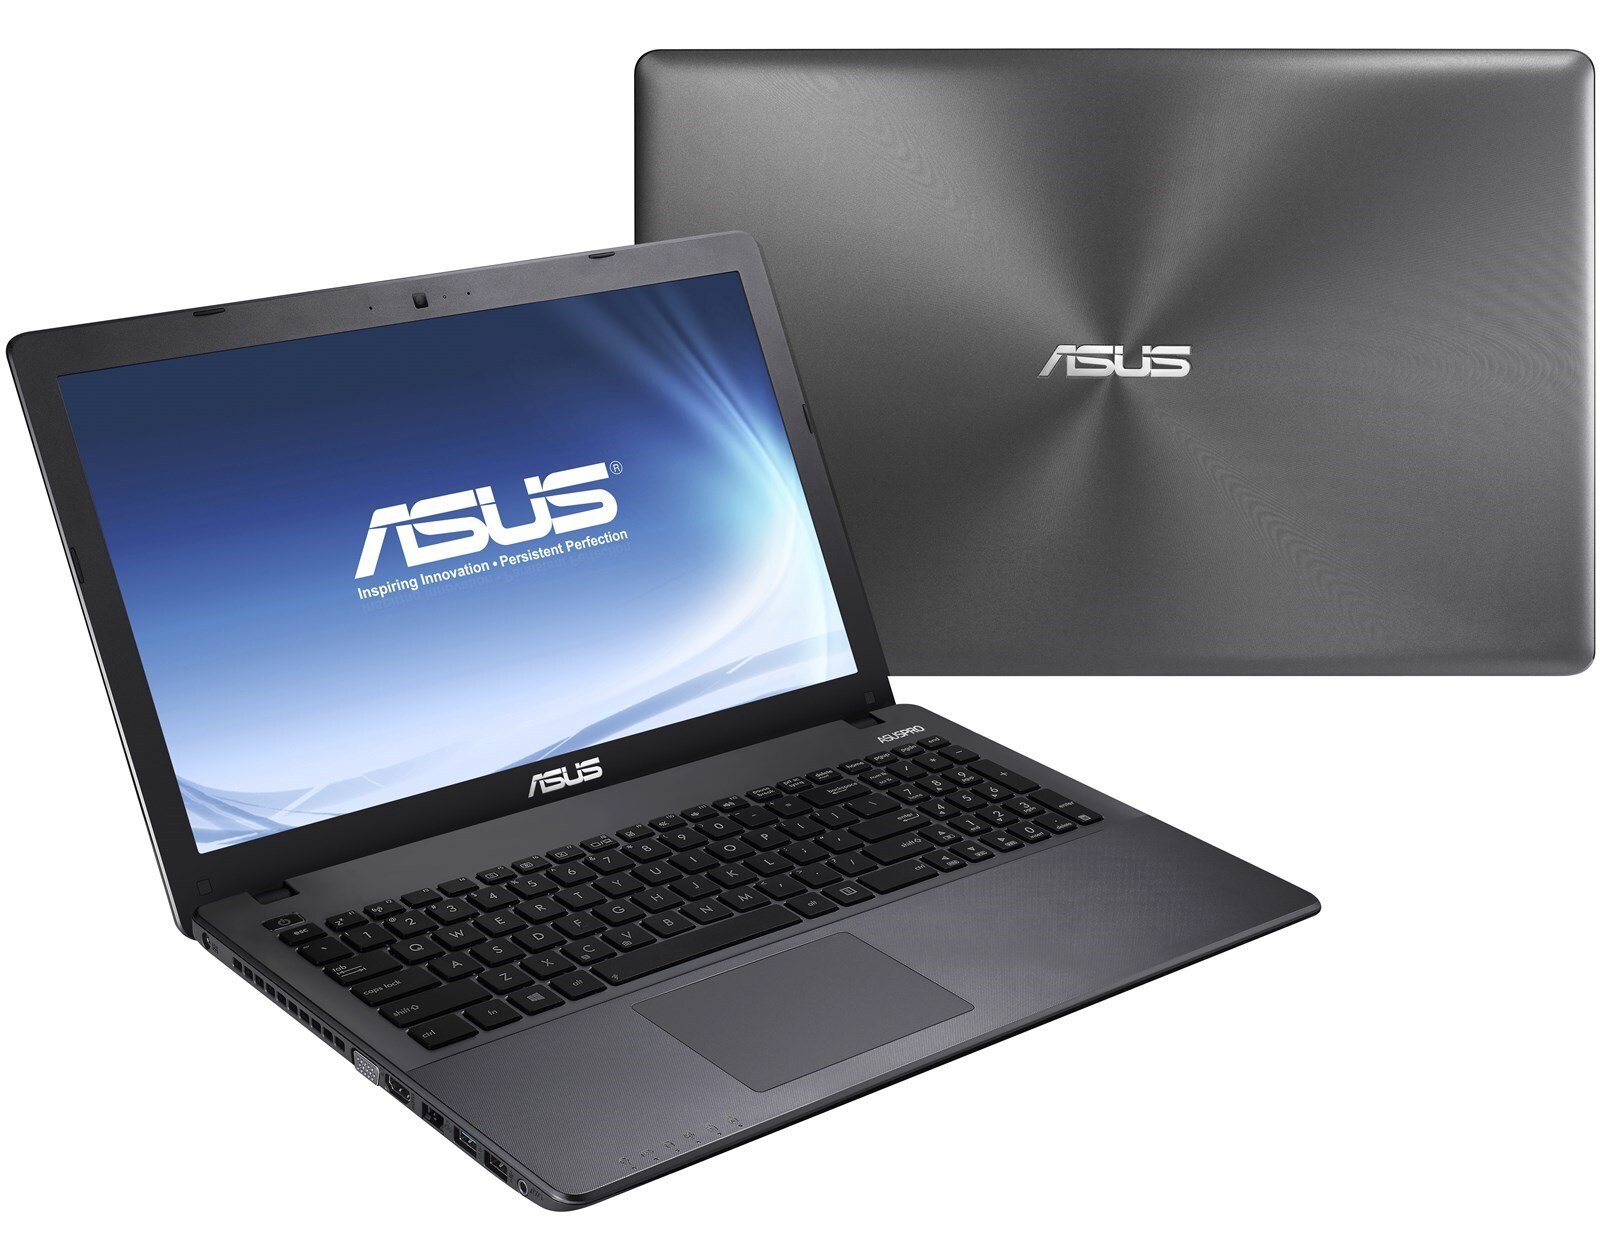 Laptop Asus P450LDV-WO193D - Core i5-4210U 1.7 Ghz, 4GB RAM, 500GB HDD, VGA NVIDIA GeForce 820M 2GB14.0 inch